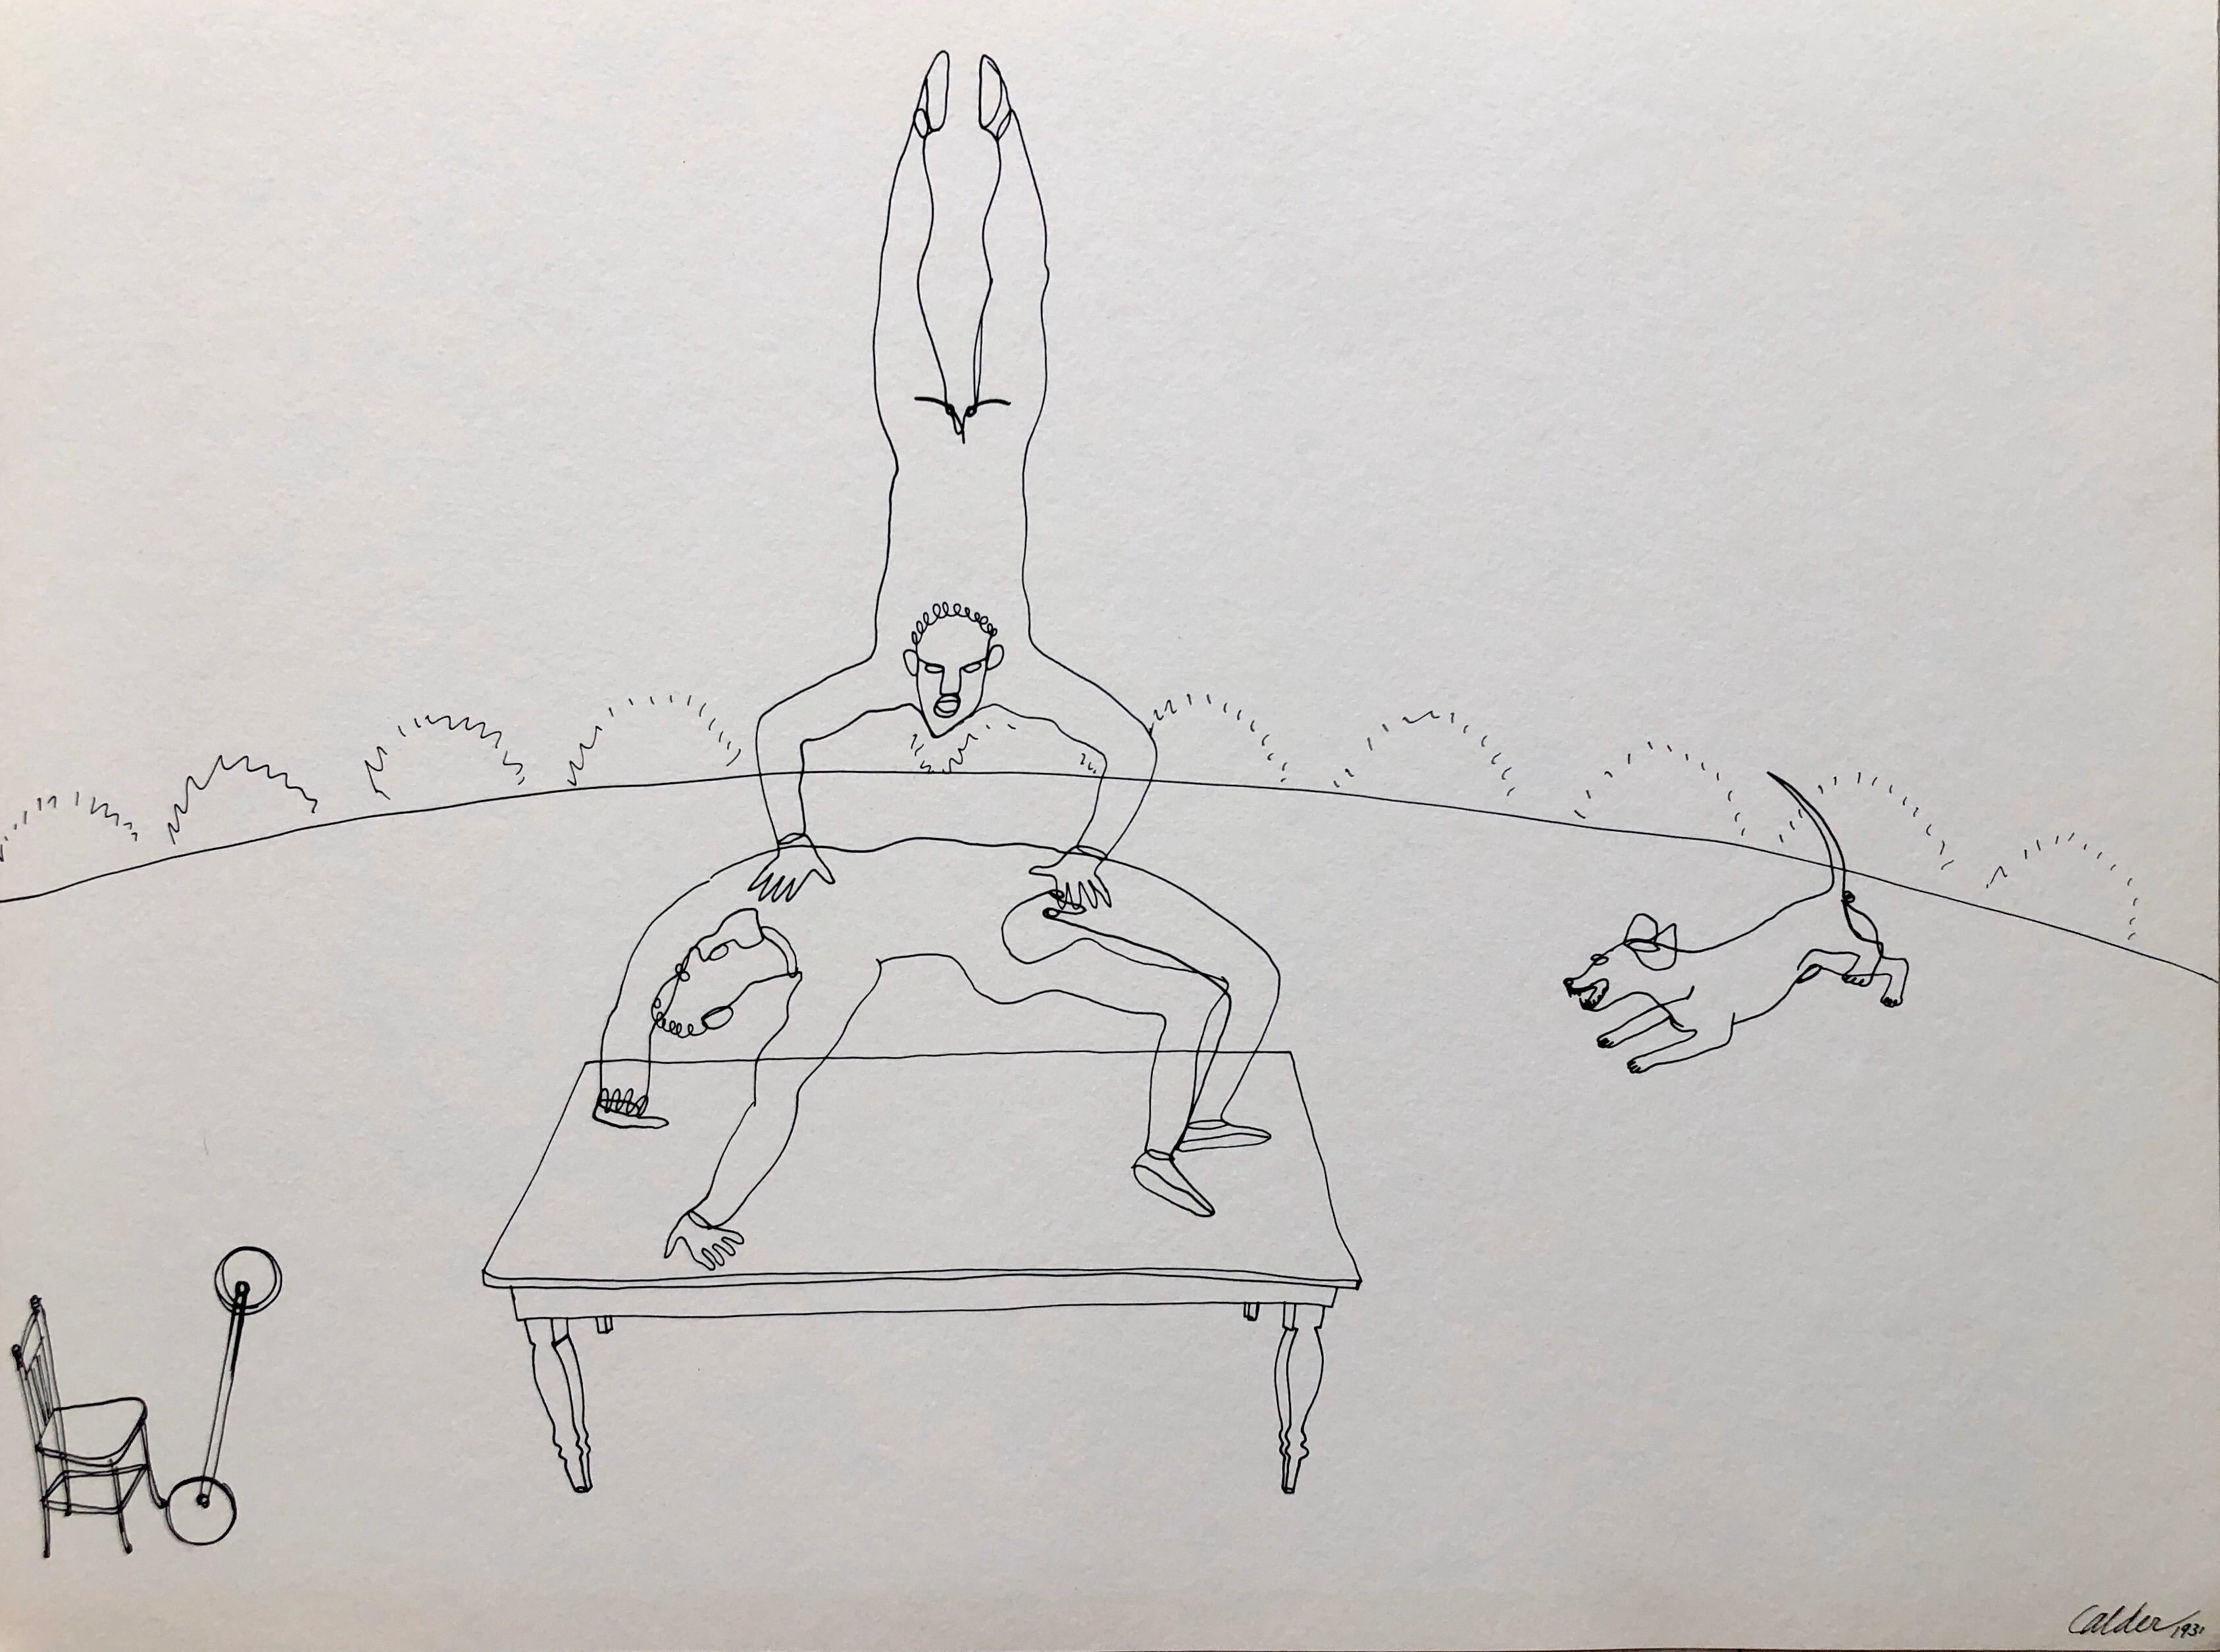 (after) Alexander Calder Animal Print - Alexander Calder Circus Reproduction Lithograph After a Drawing